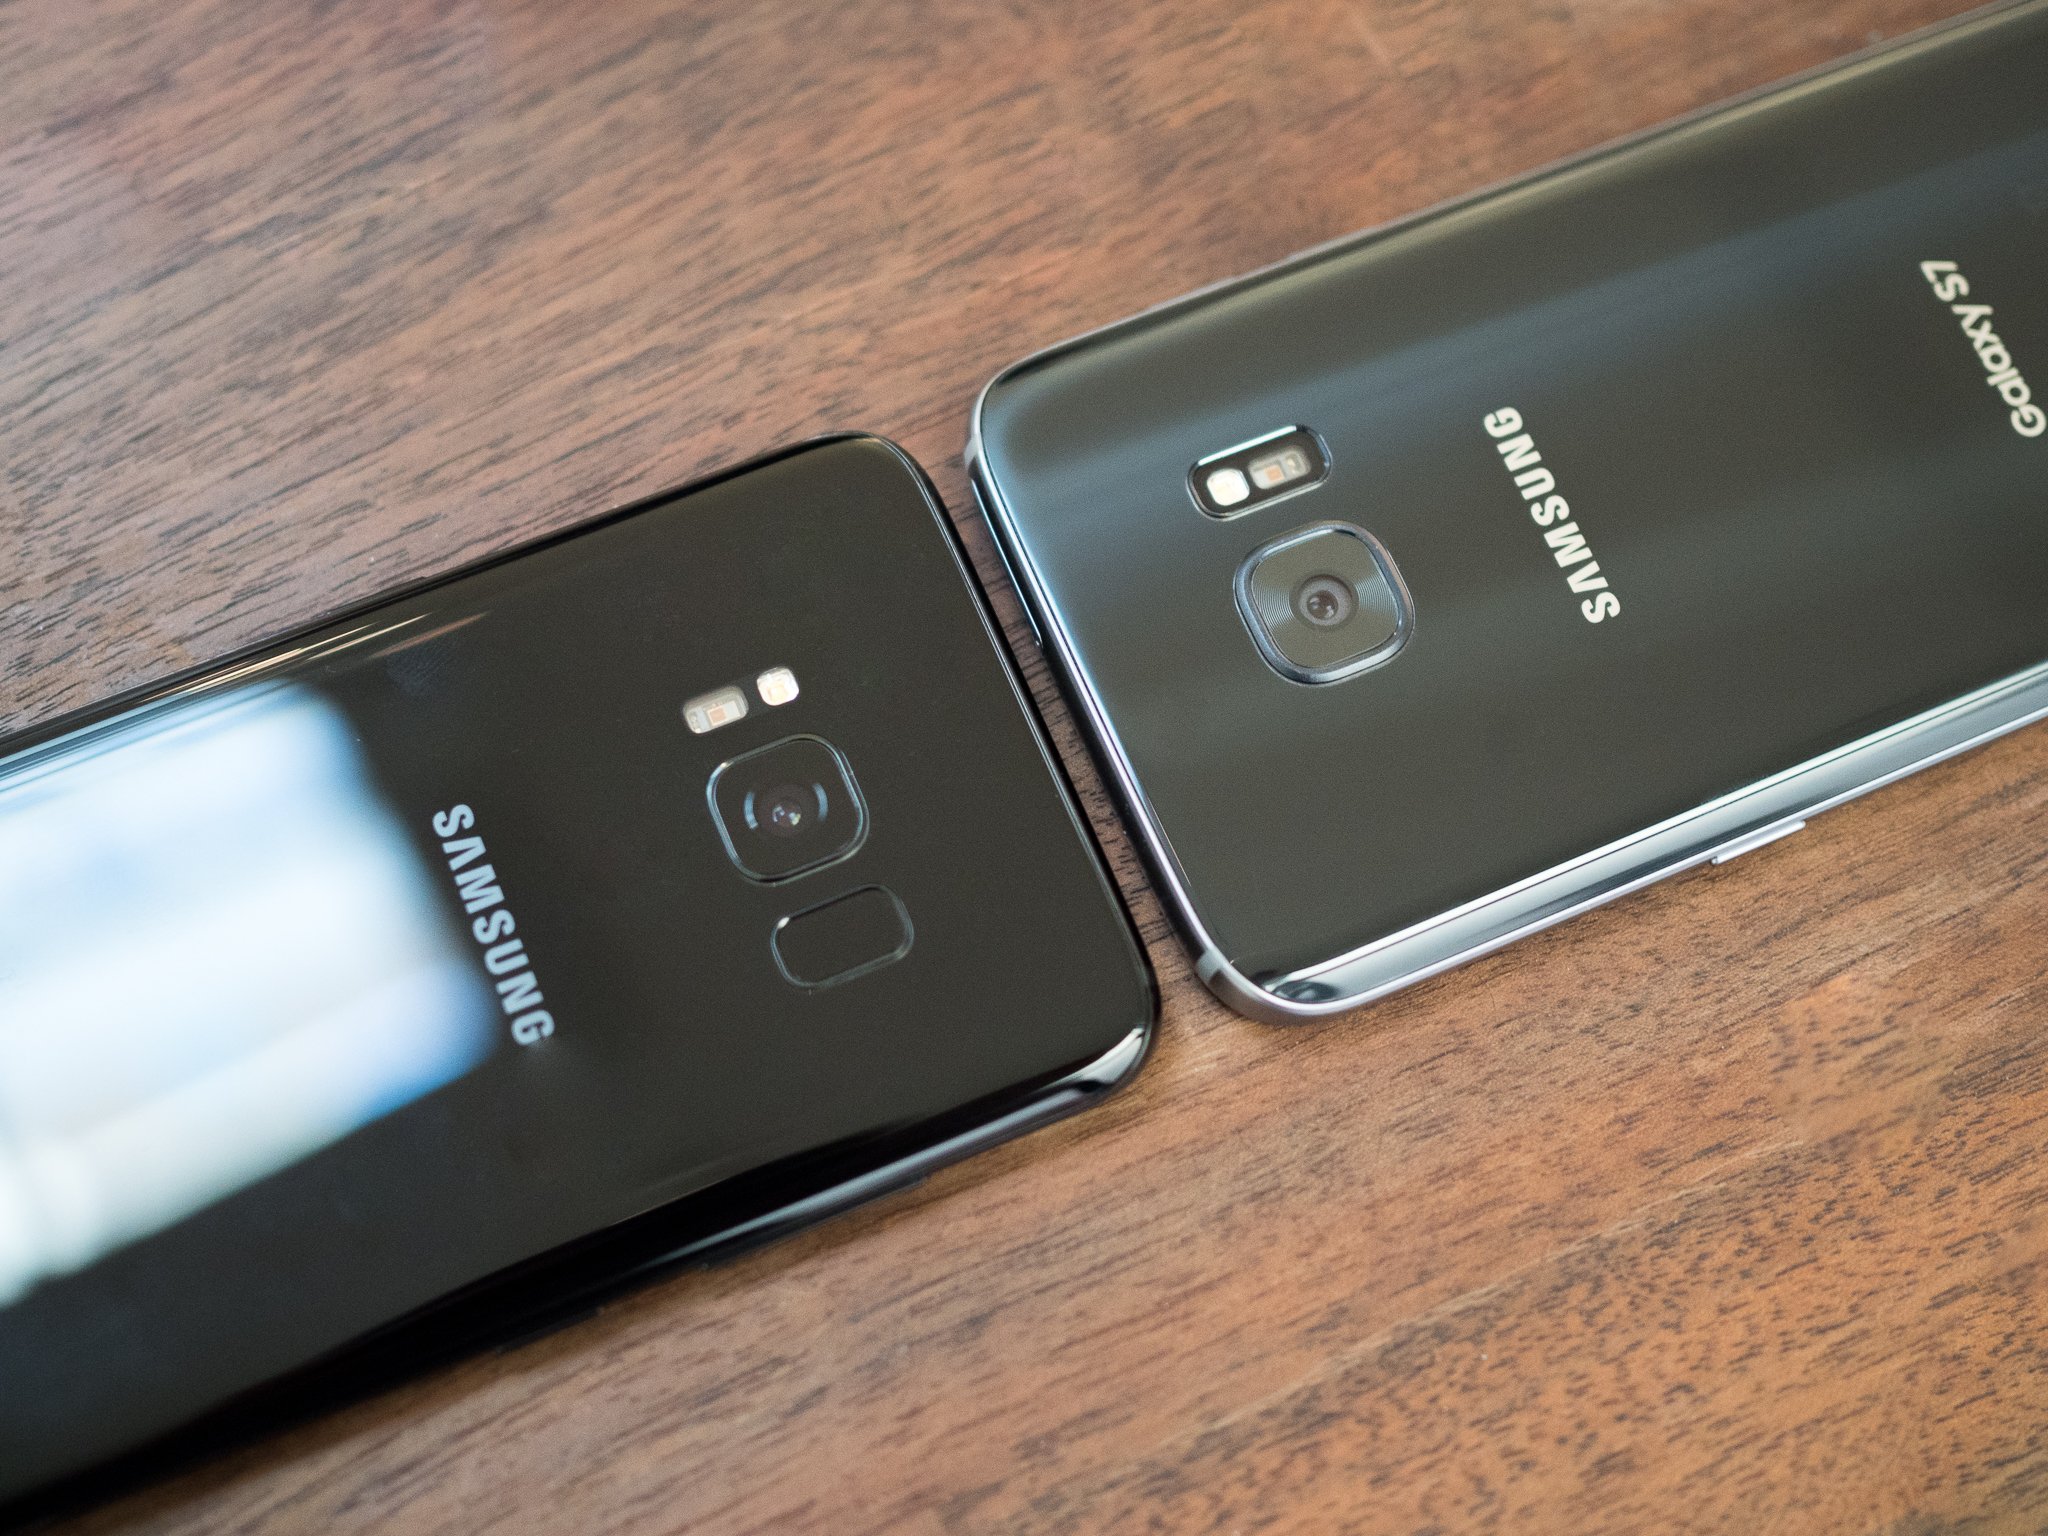 Samsung Galaxy S7 Edge S8